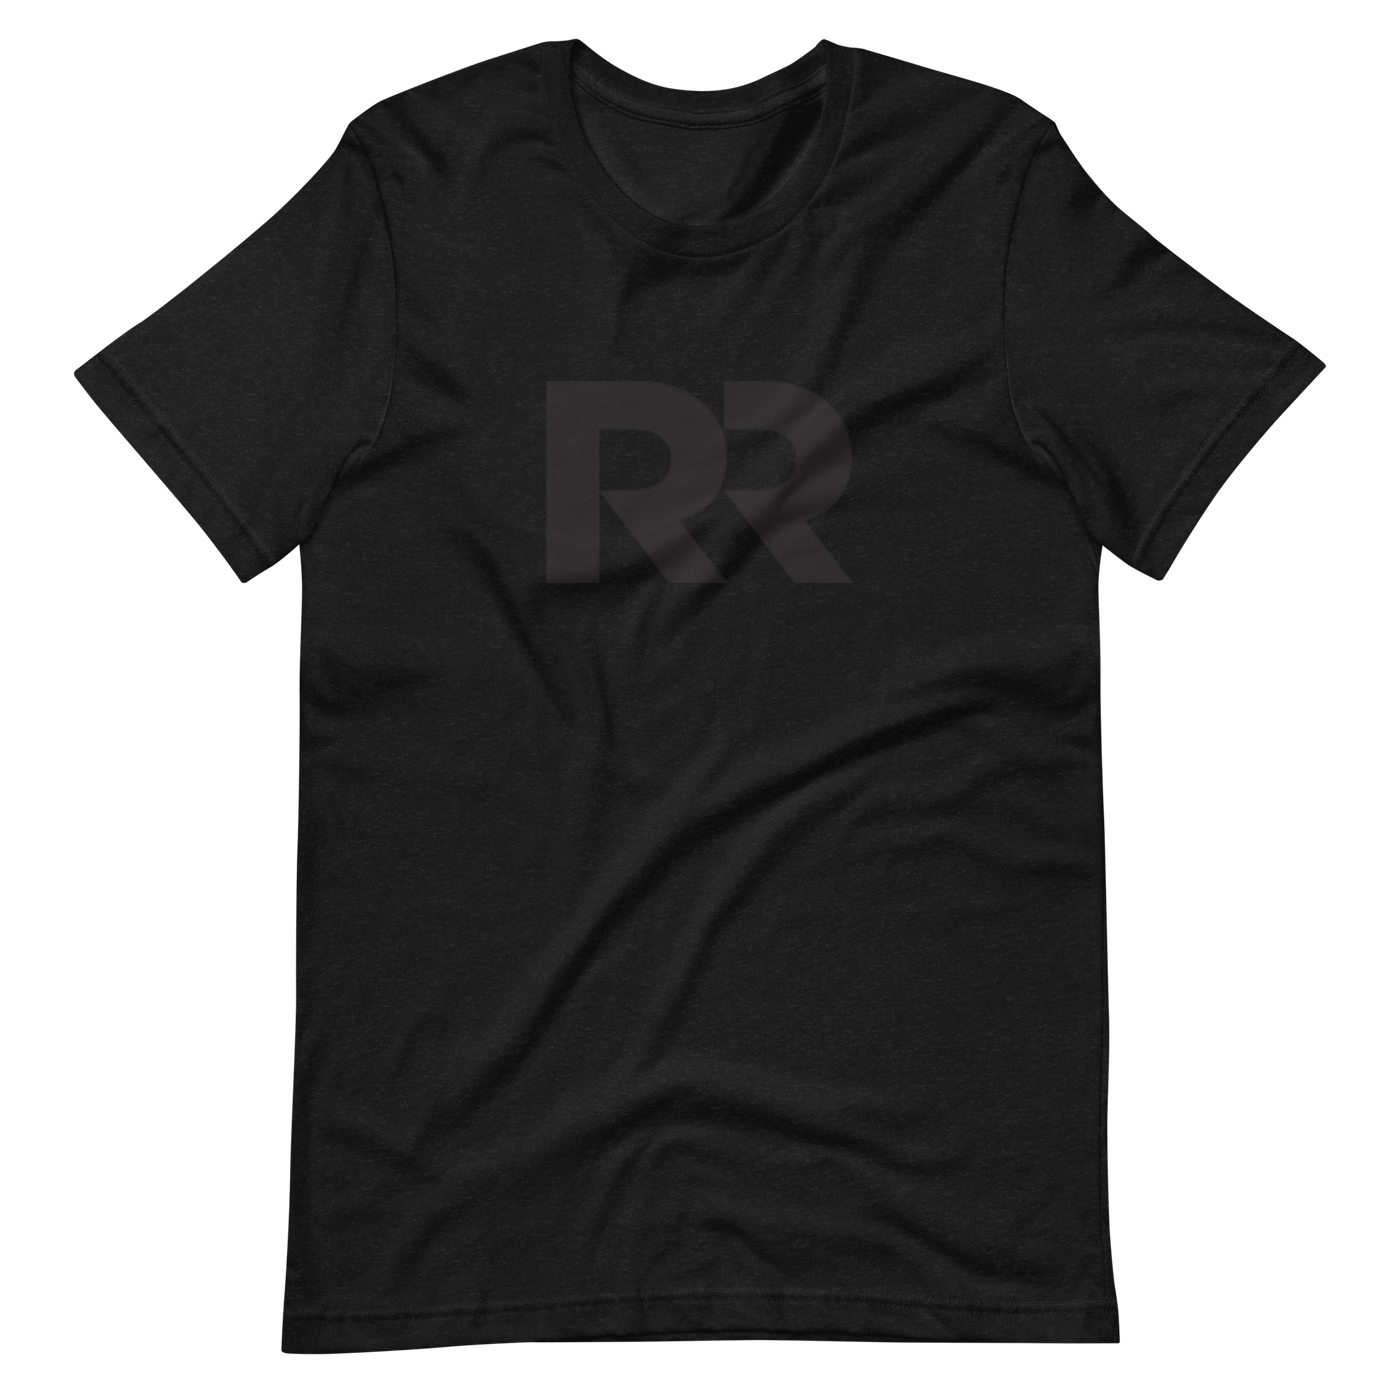 RR Mark T-shirt